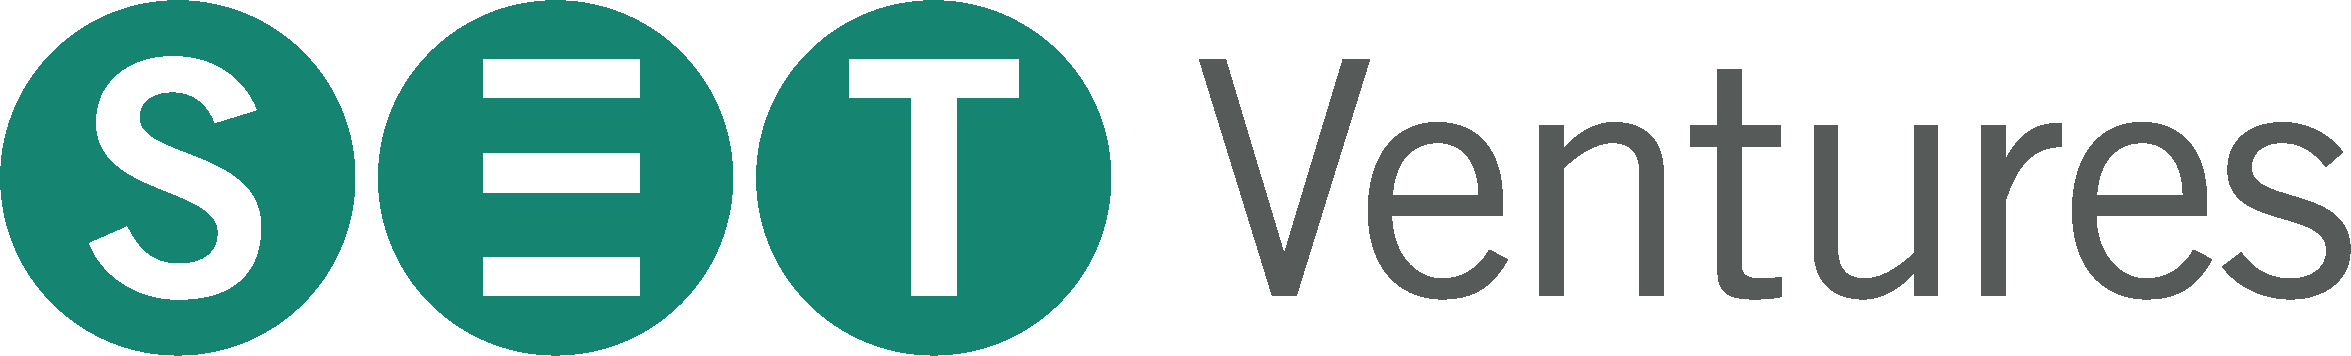 SET Ventures-logo